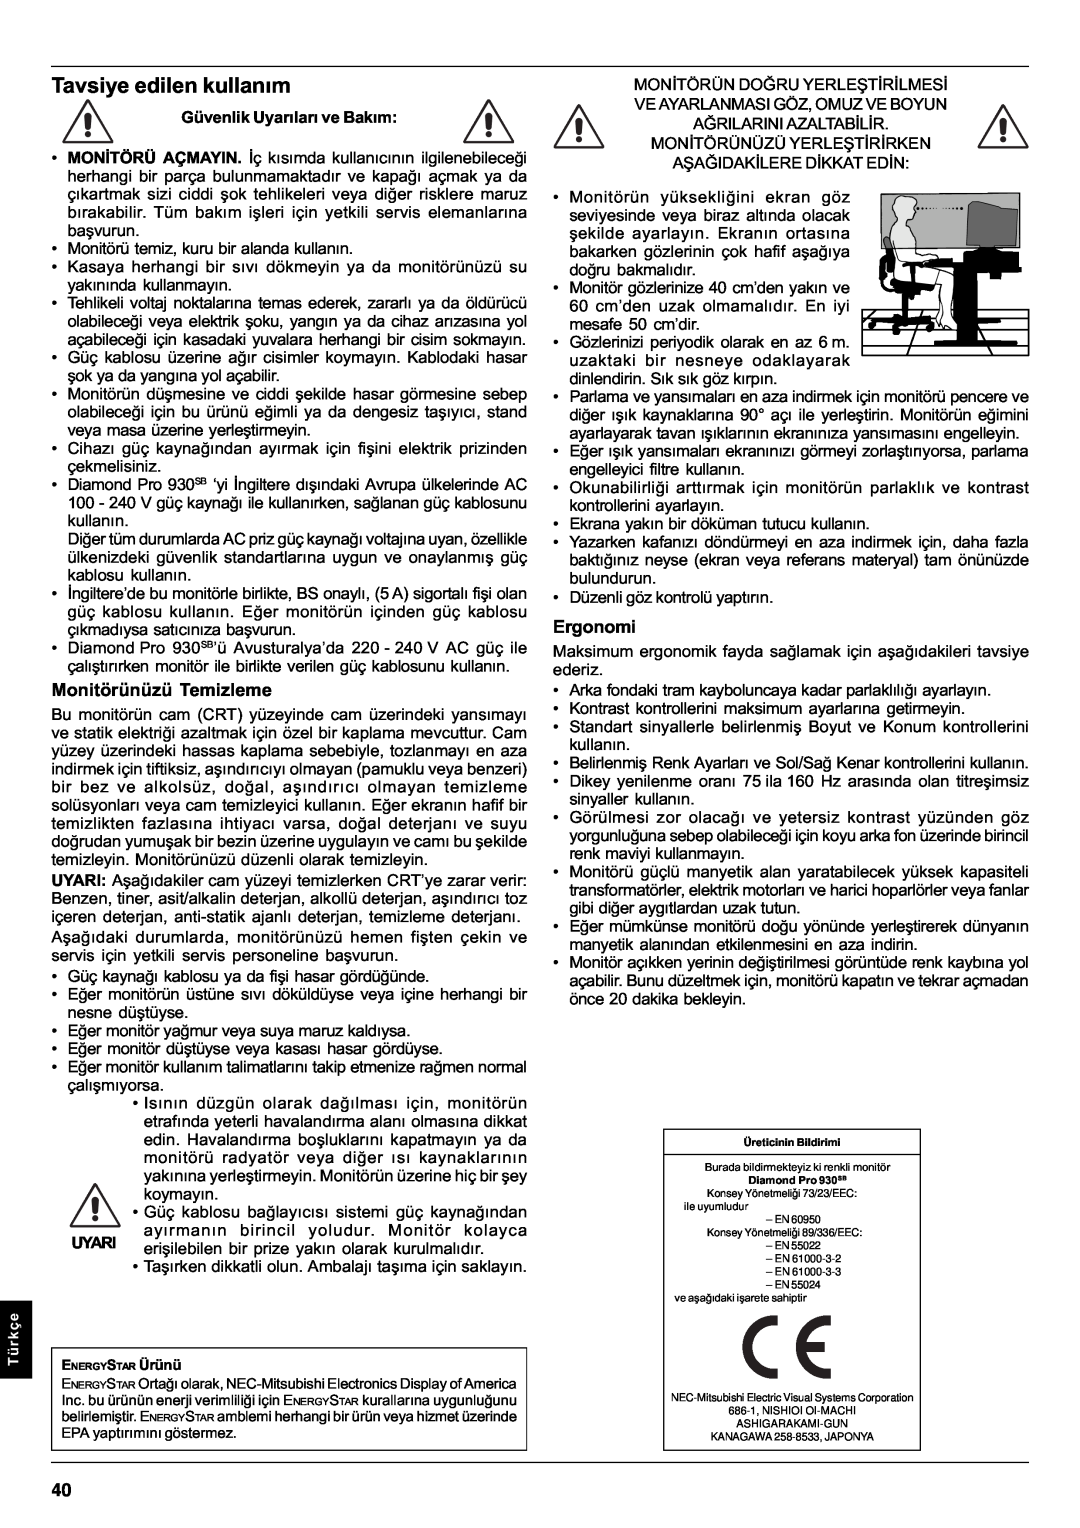 Mitsubishi Electronics Pro 930SB user manual Tavsiye edilen kullaným, Monitörünüzü Temizleme, Ergonomi 